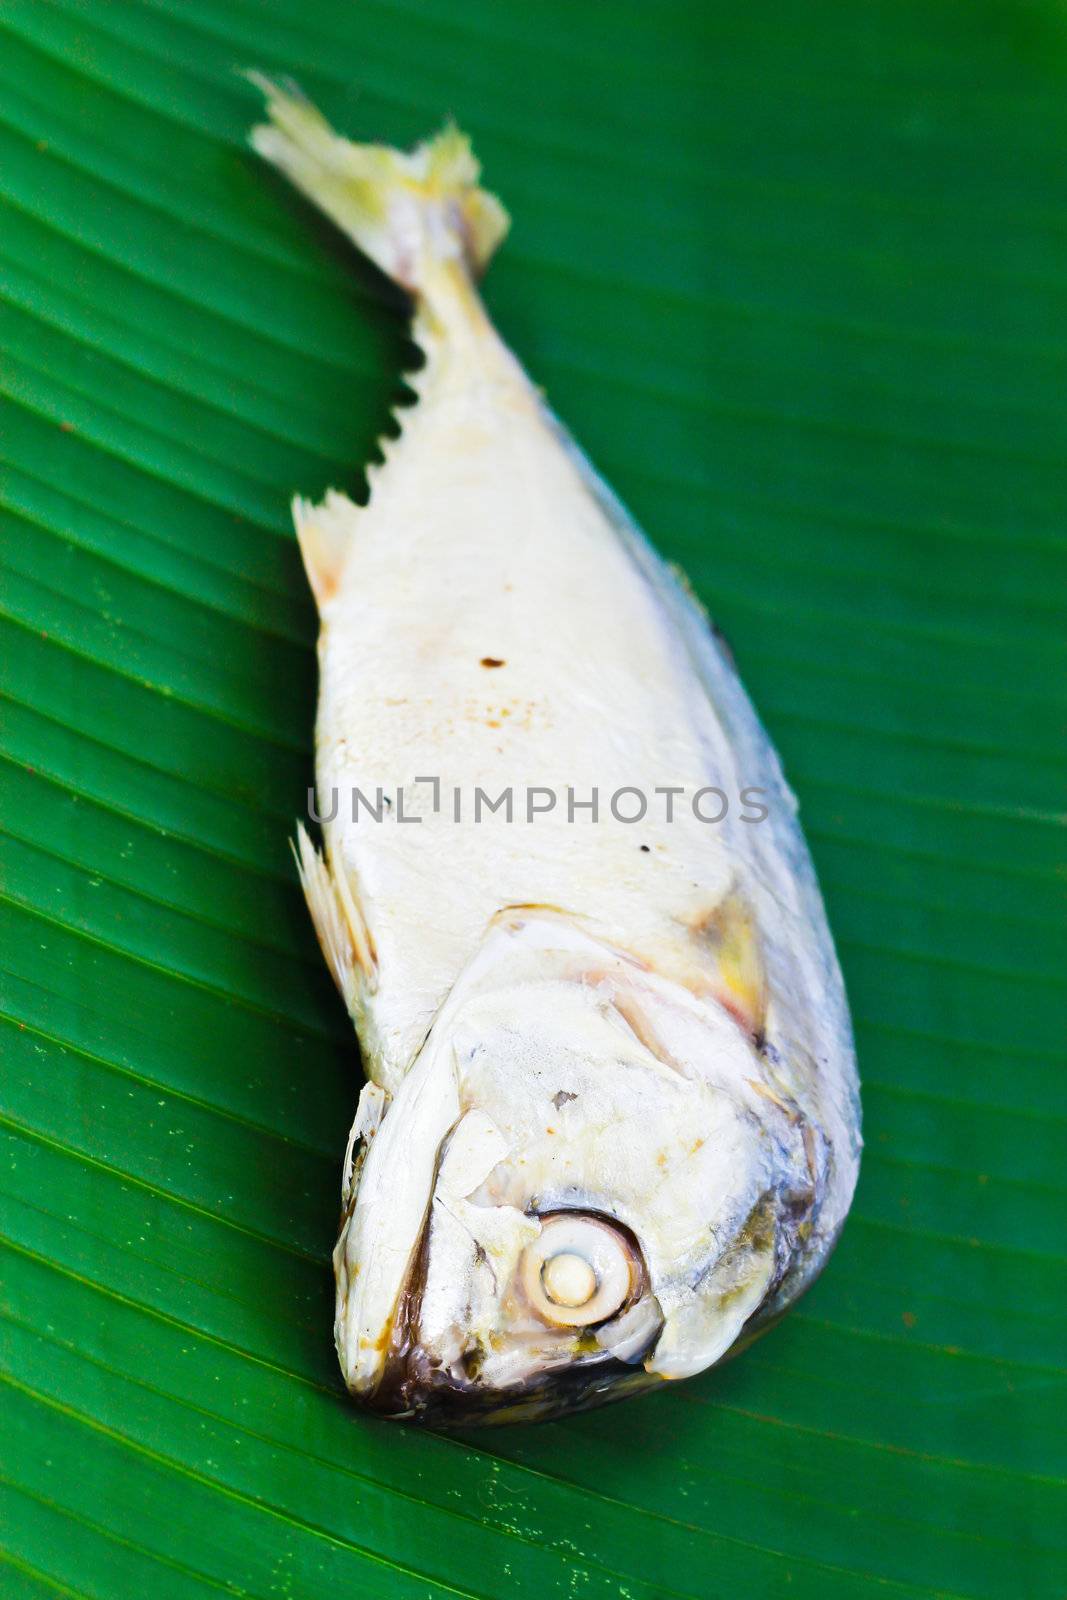 Chub mackerel on a banana leaf.